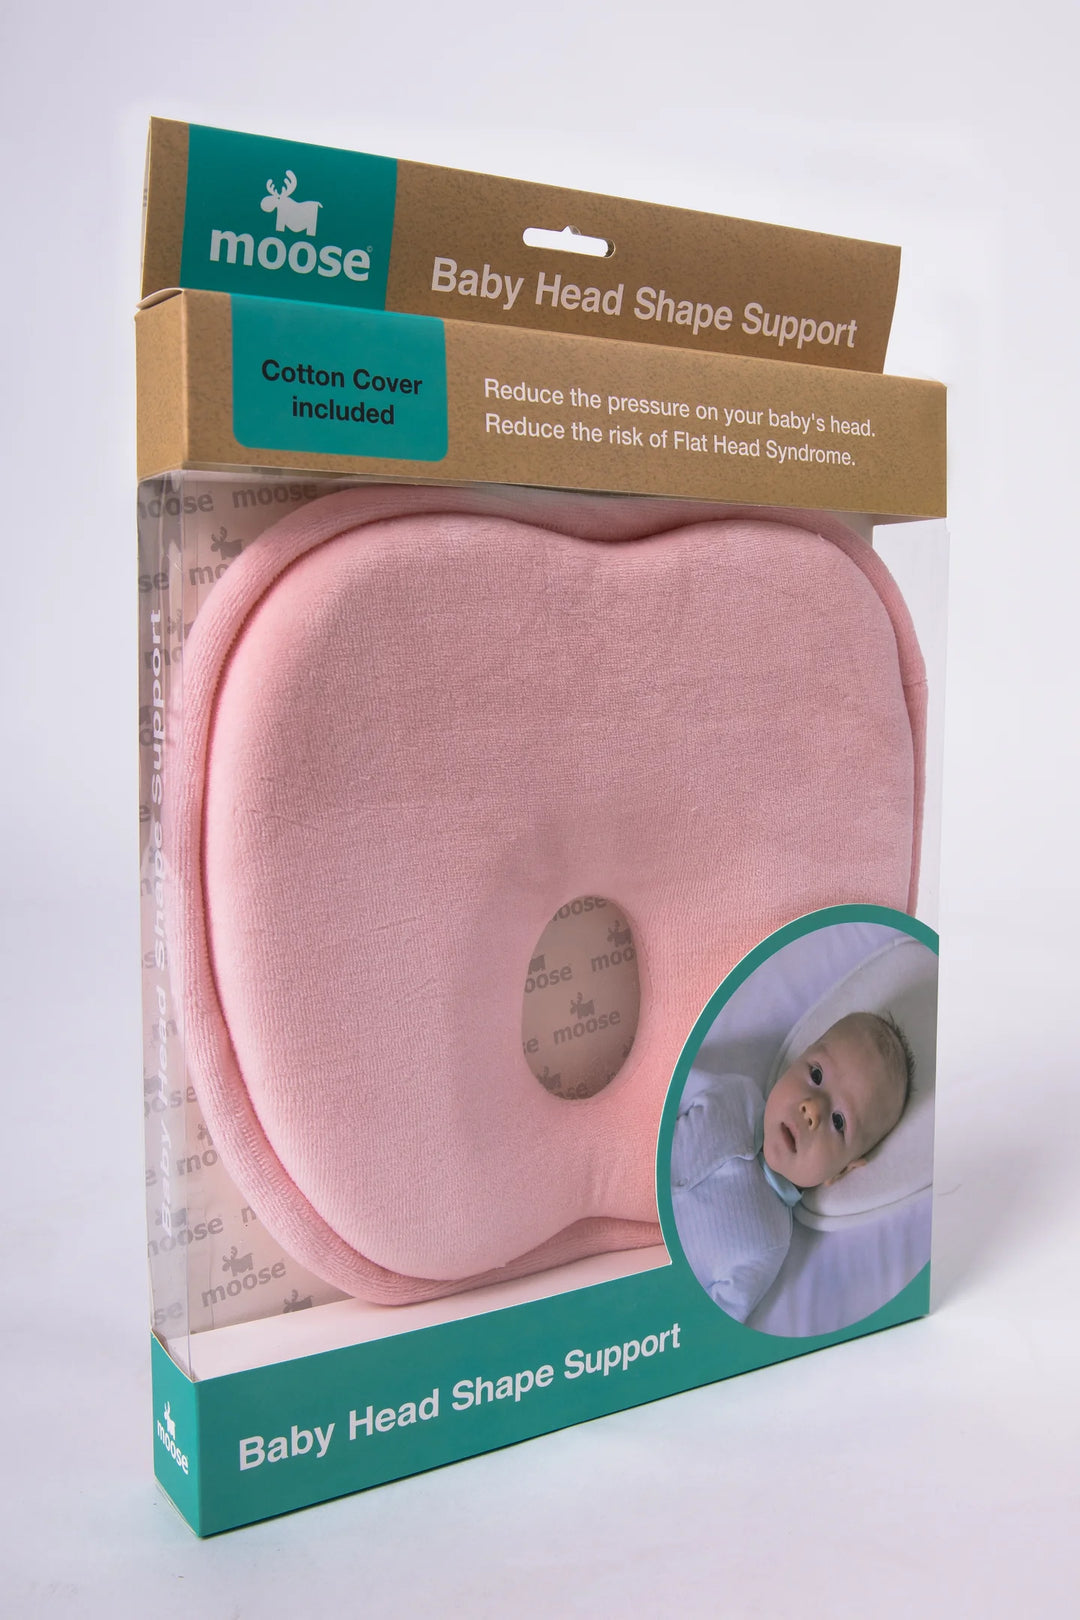 Moosebaby Baby Head Shape Support